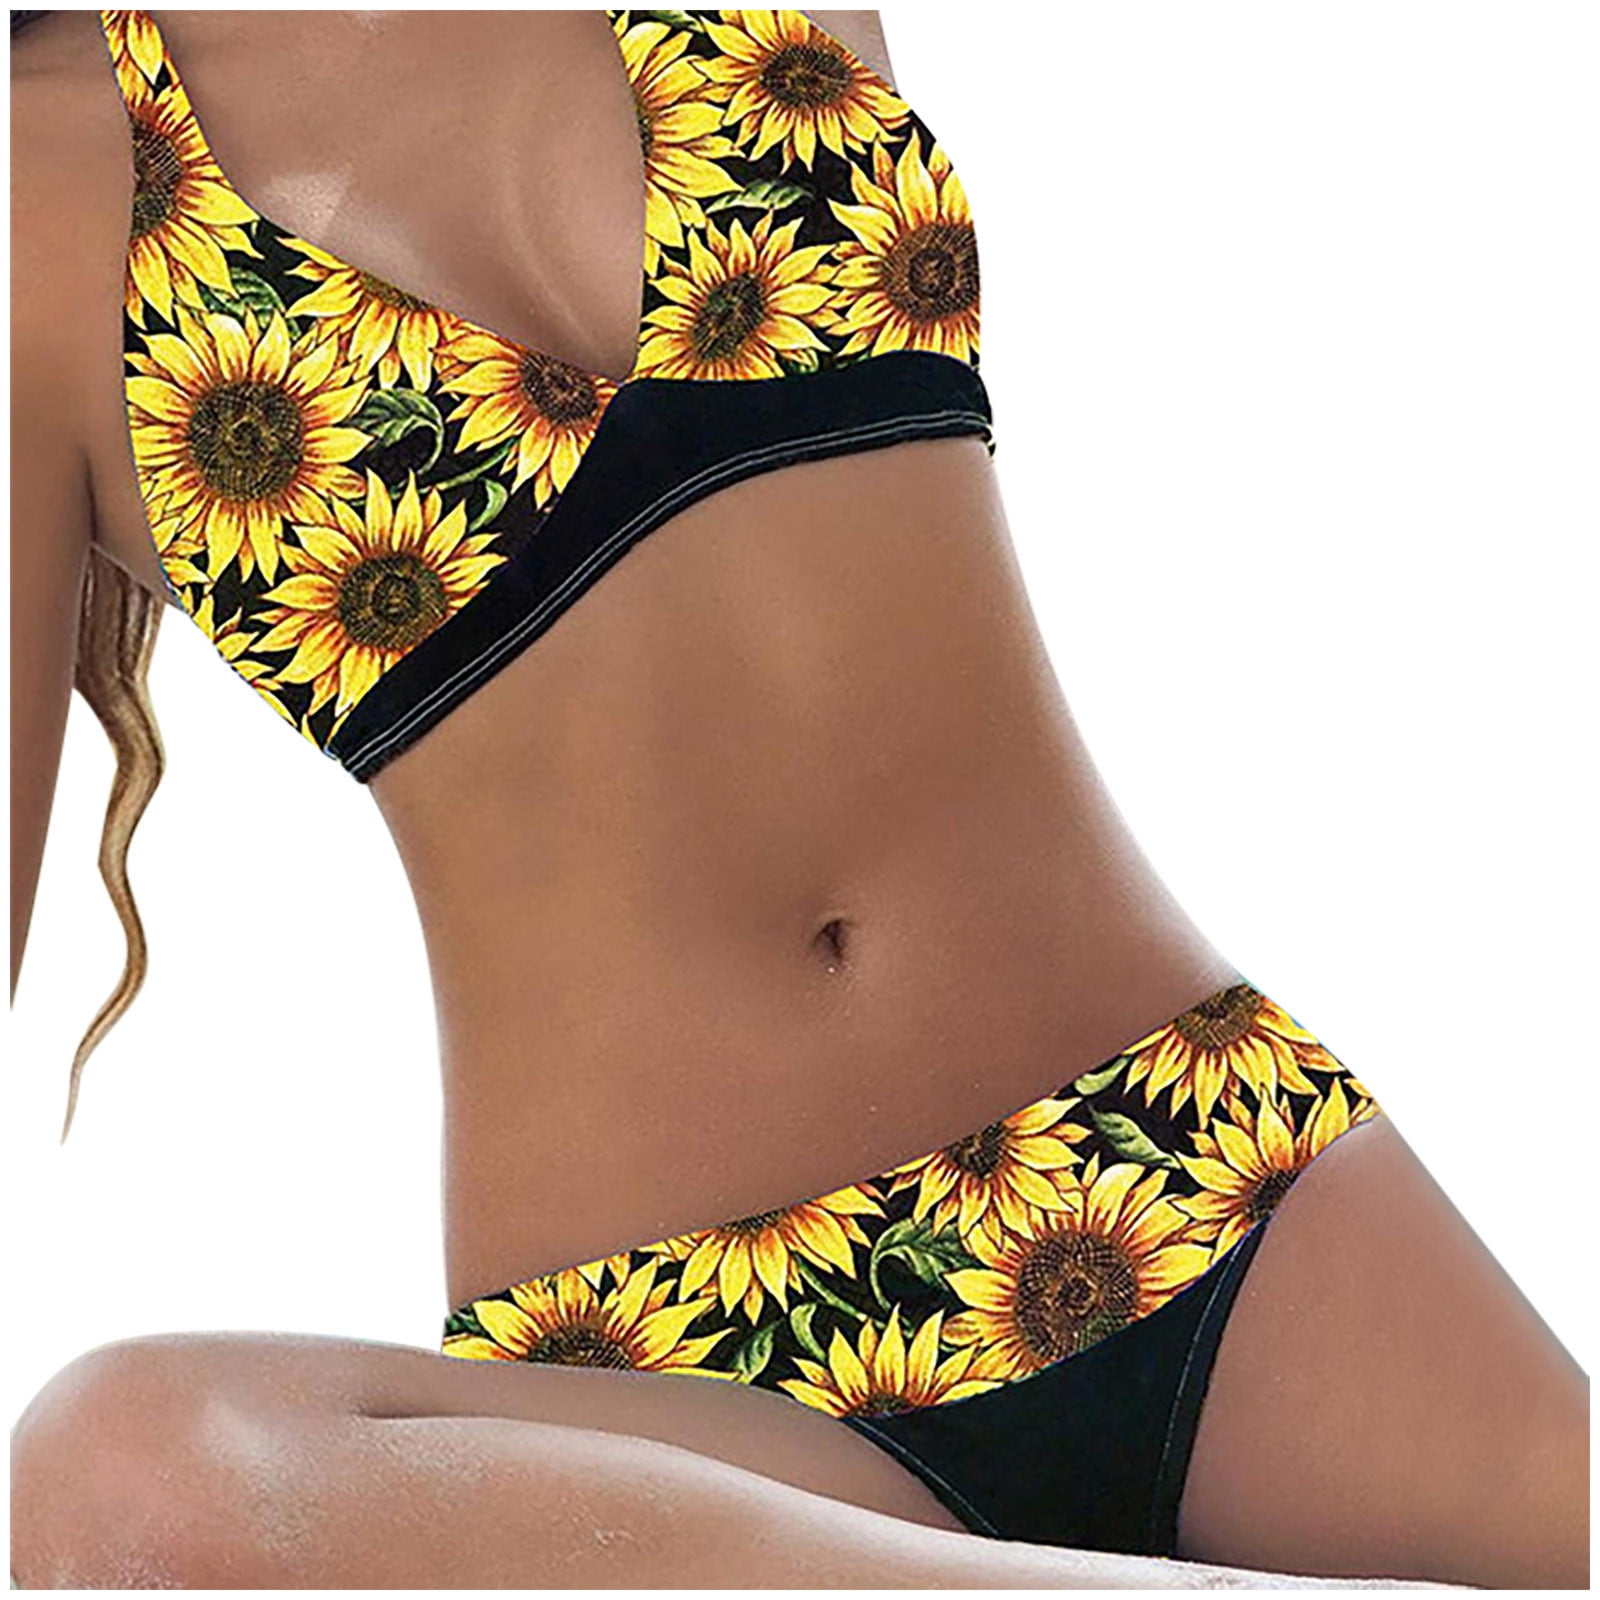 Sunflowers” Bikini – WOODSTOCK ZAMBON